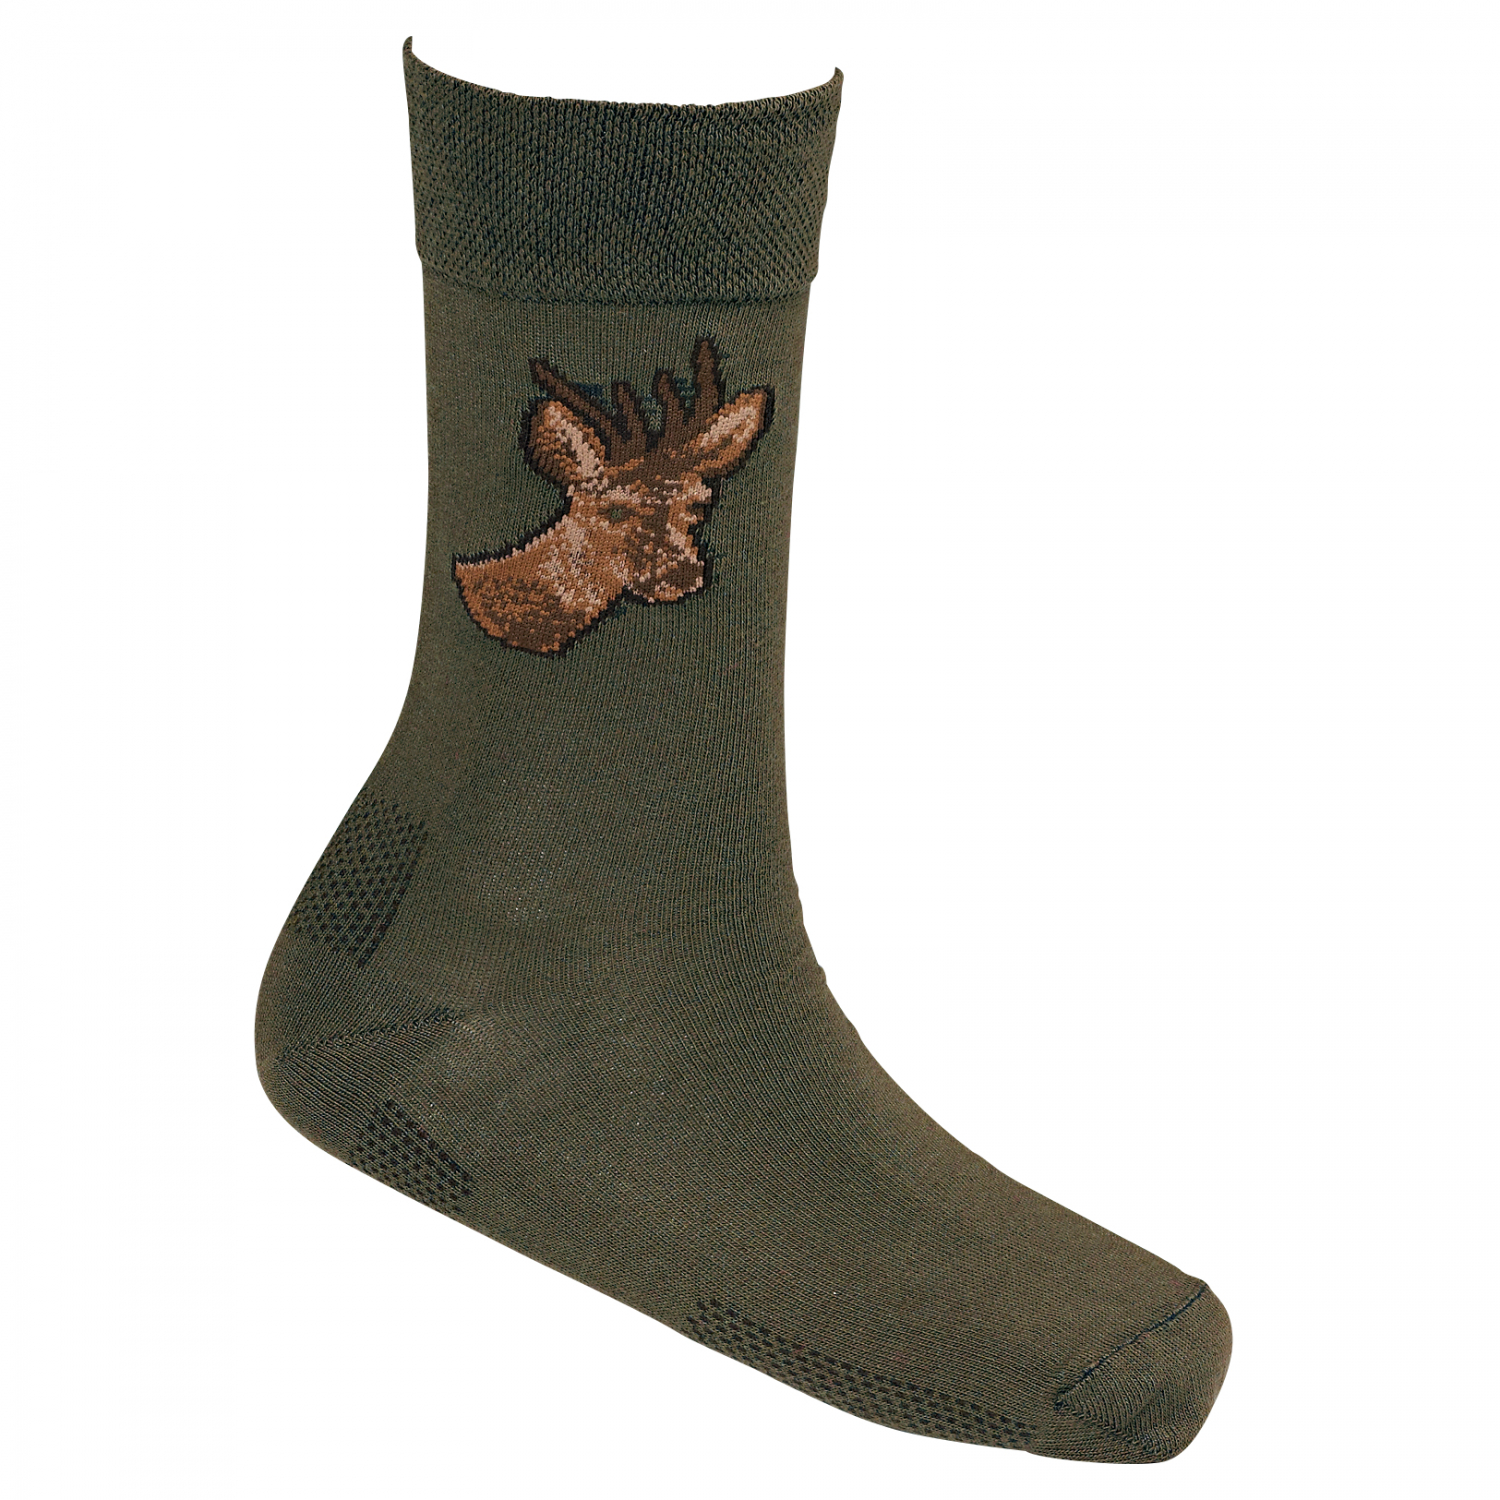 Lasting Unisex Trekking Socks (with Deer Embroidery) 